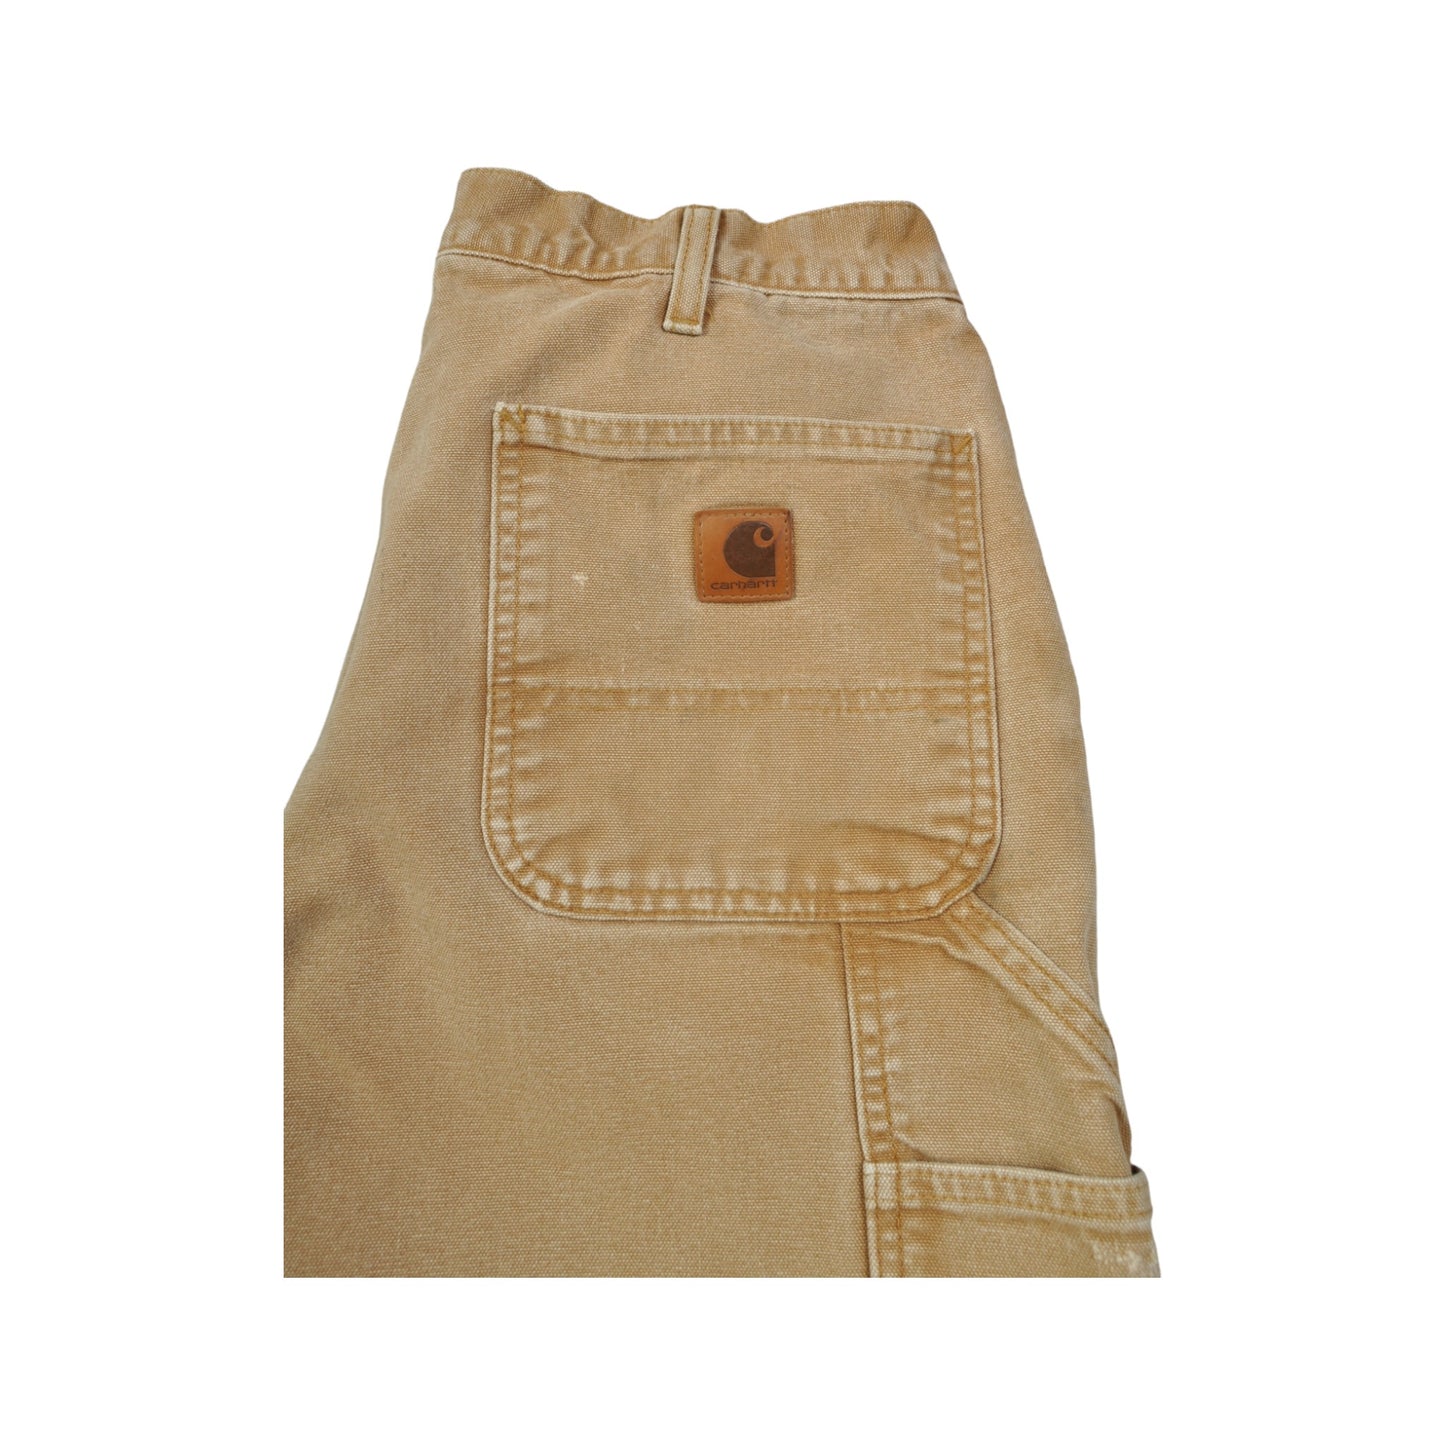 Vintage Carhartt Lined Carpenter Pants Tan W34 L30